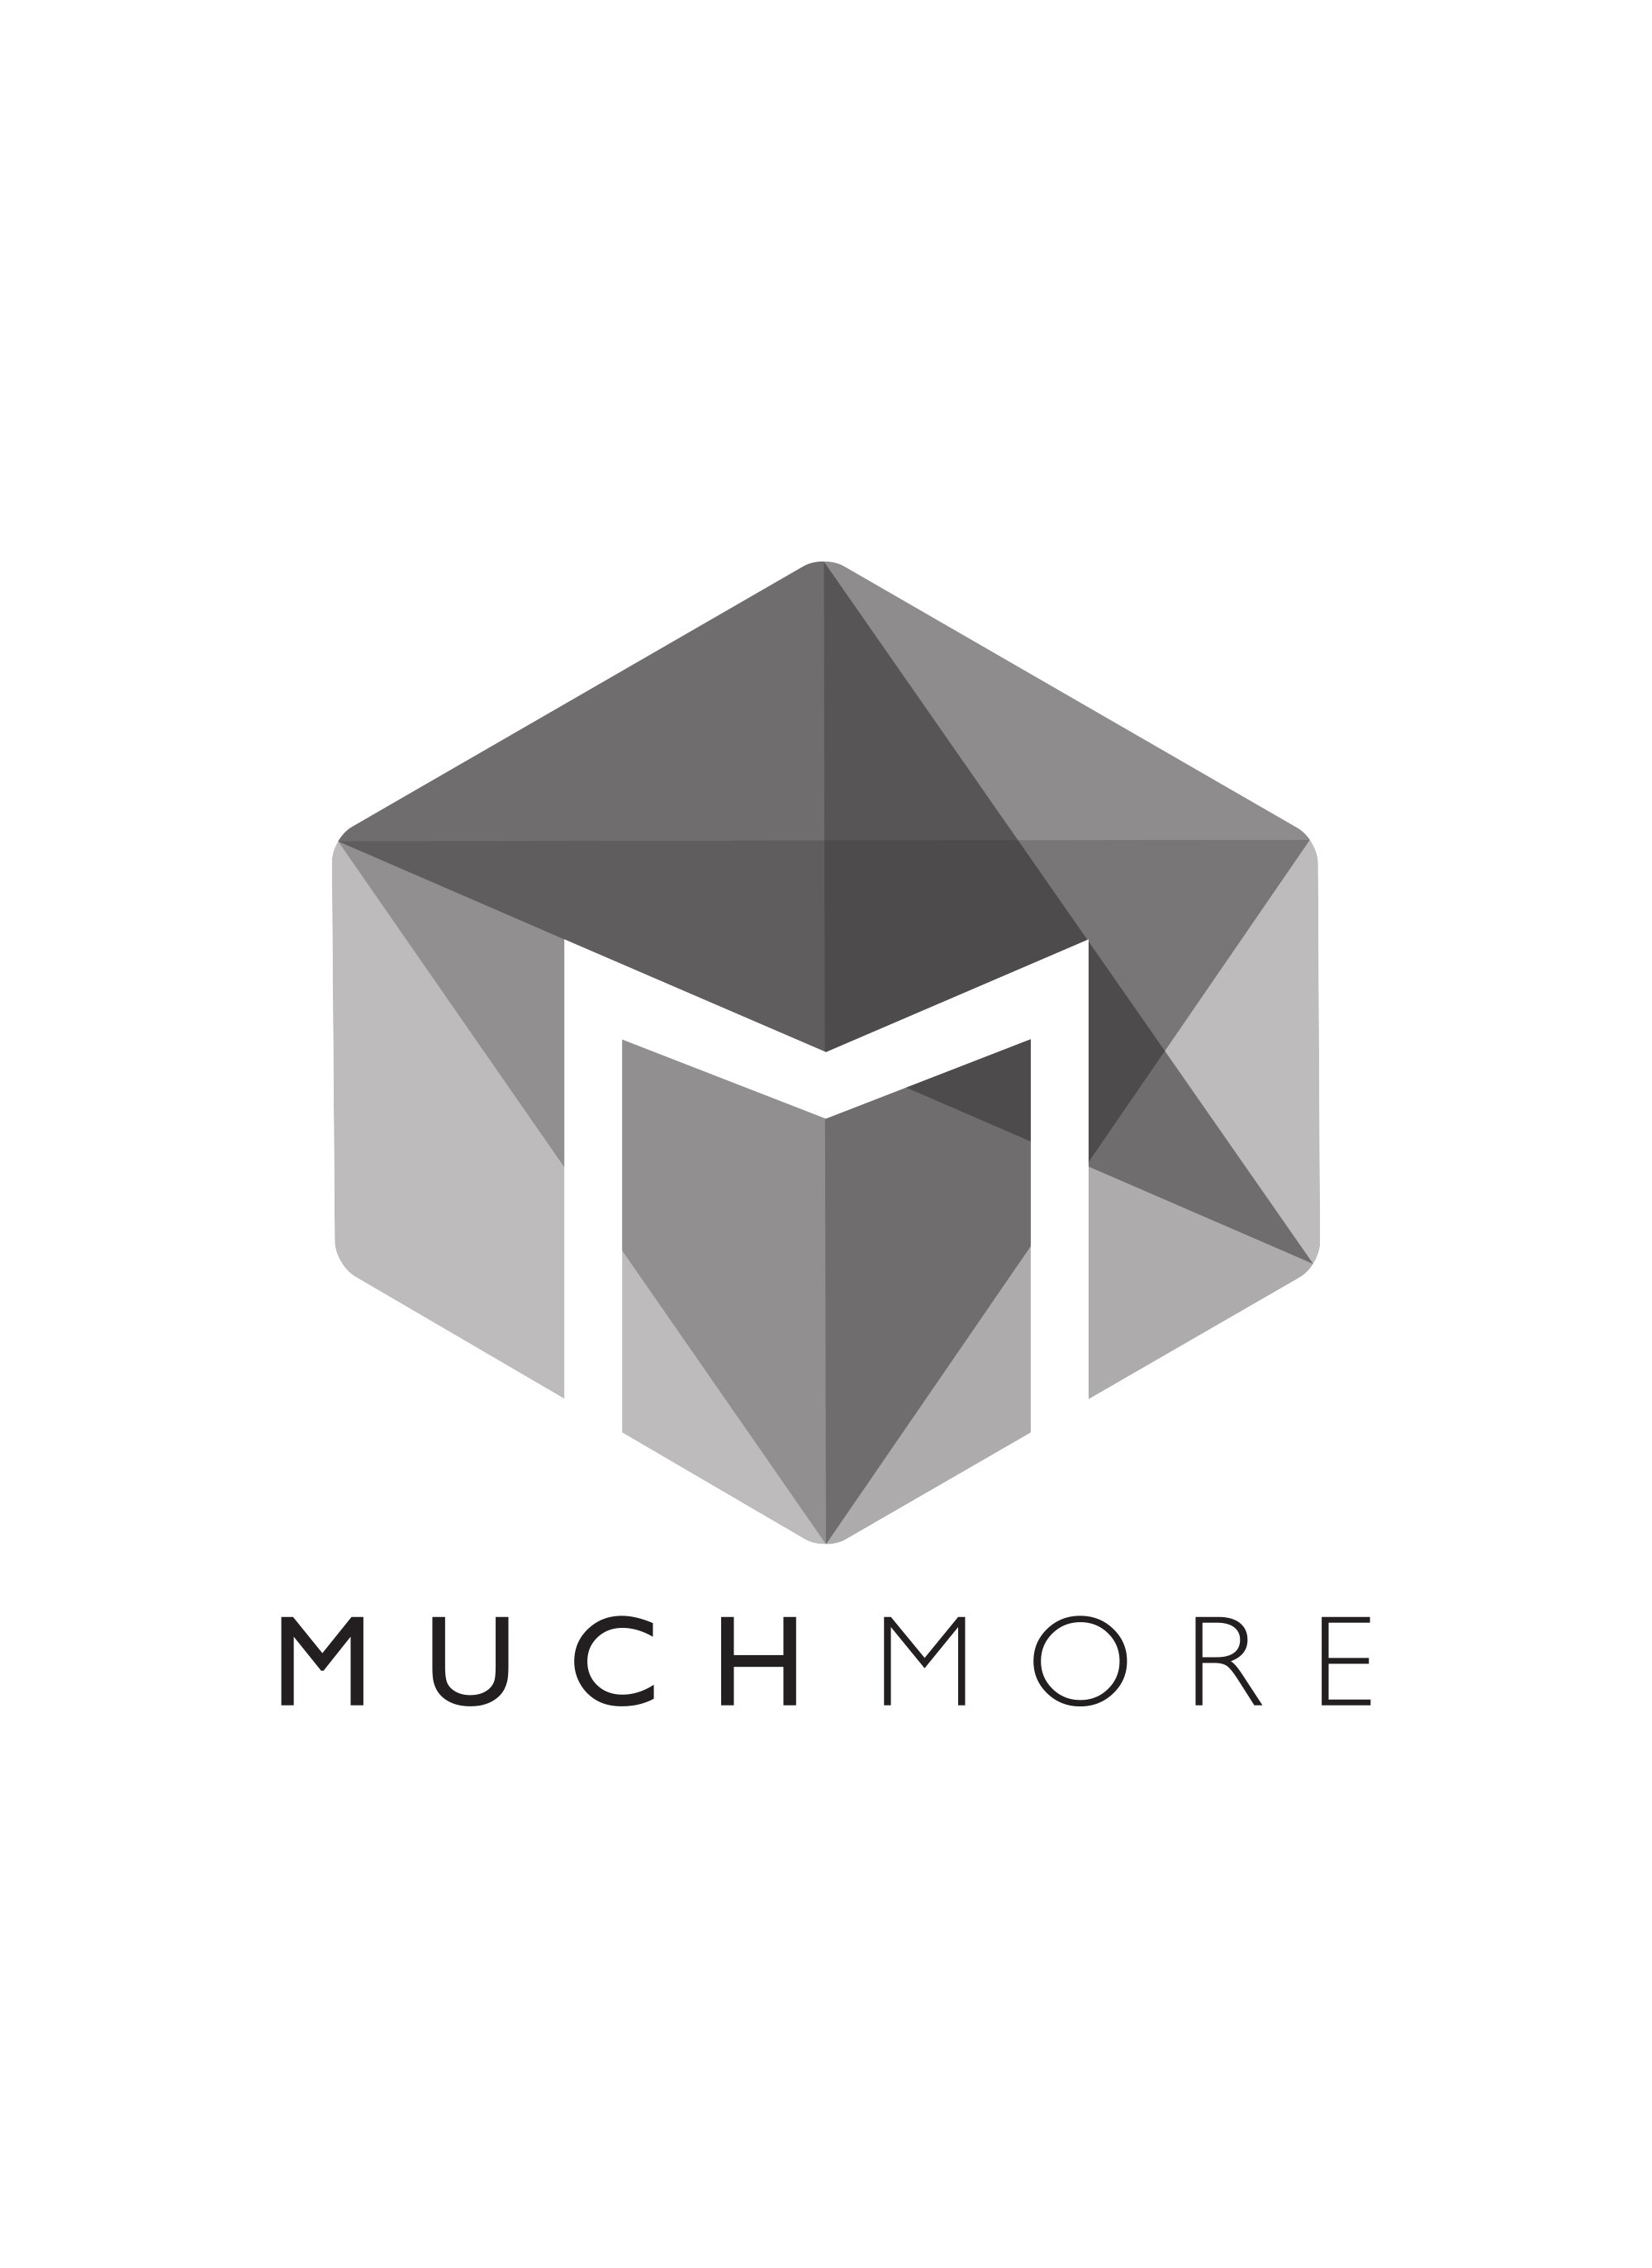 muchmore_logo2.jpg